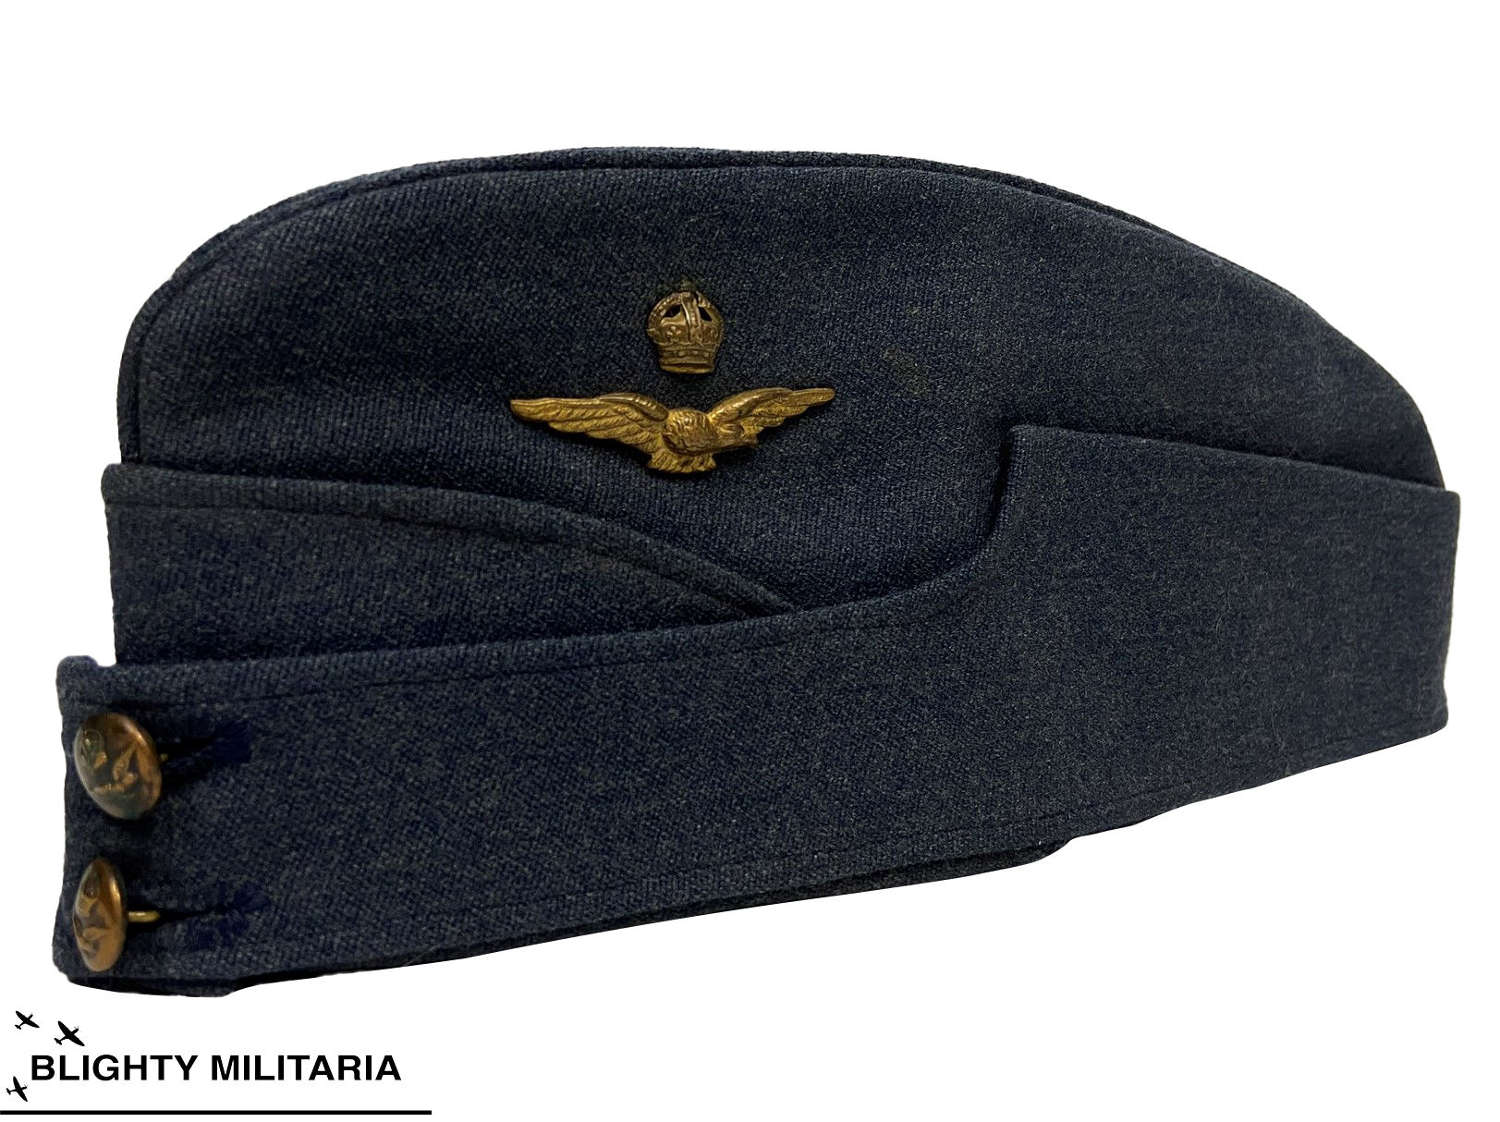 Original WW2 RAF Officers Forage Cap - Large Size